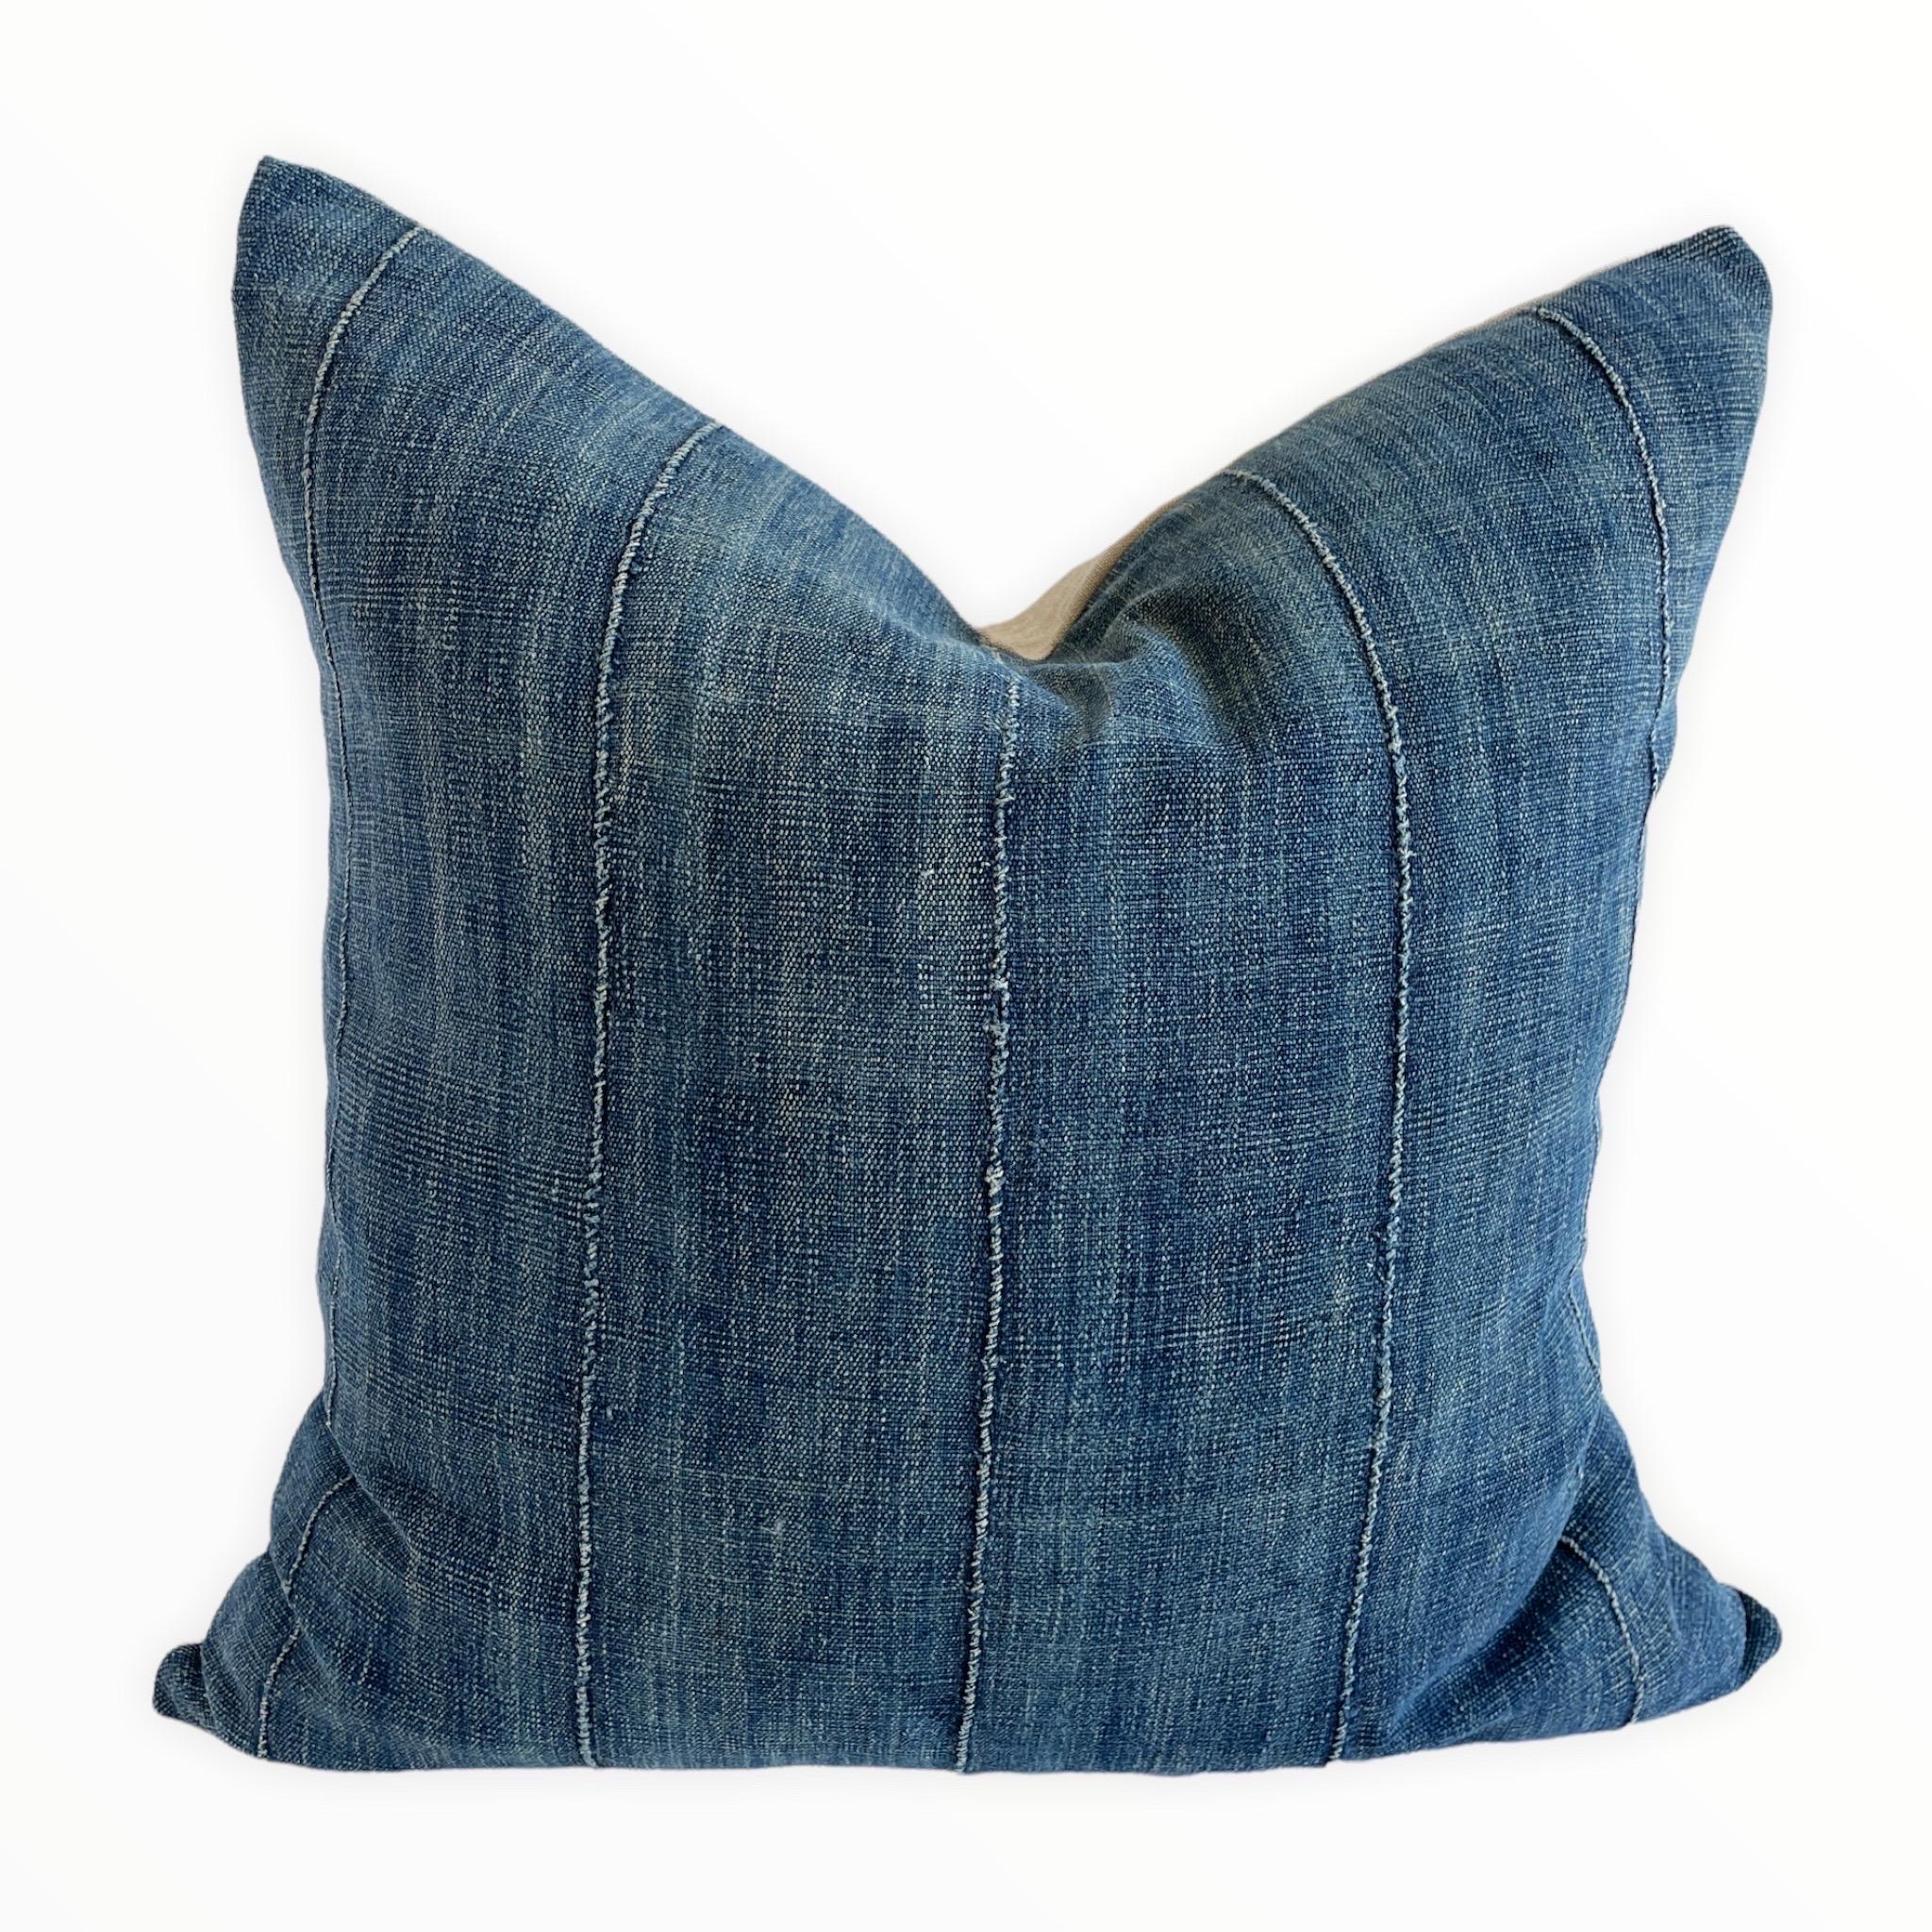 Vintage Faded Blue Indigo Pillow Insert 3